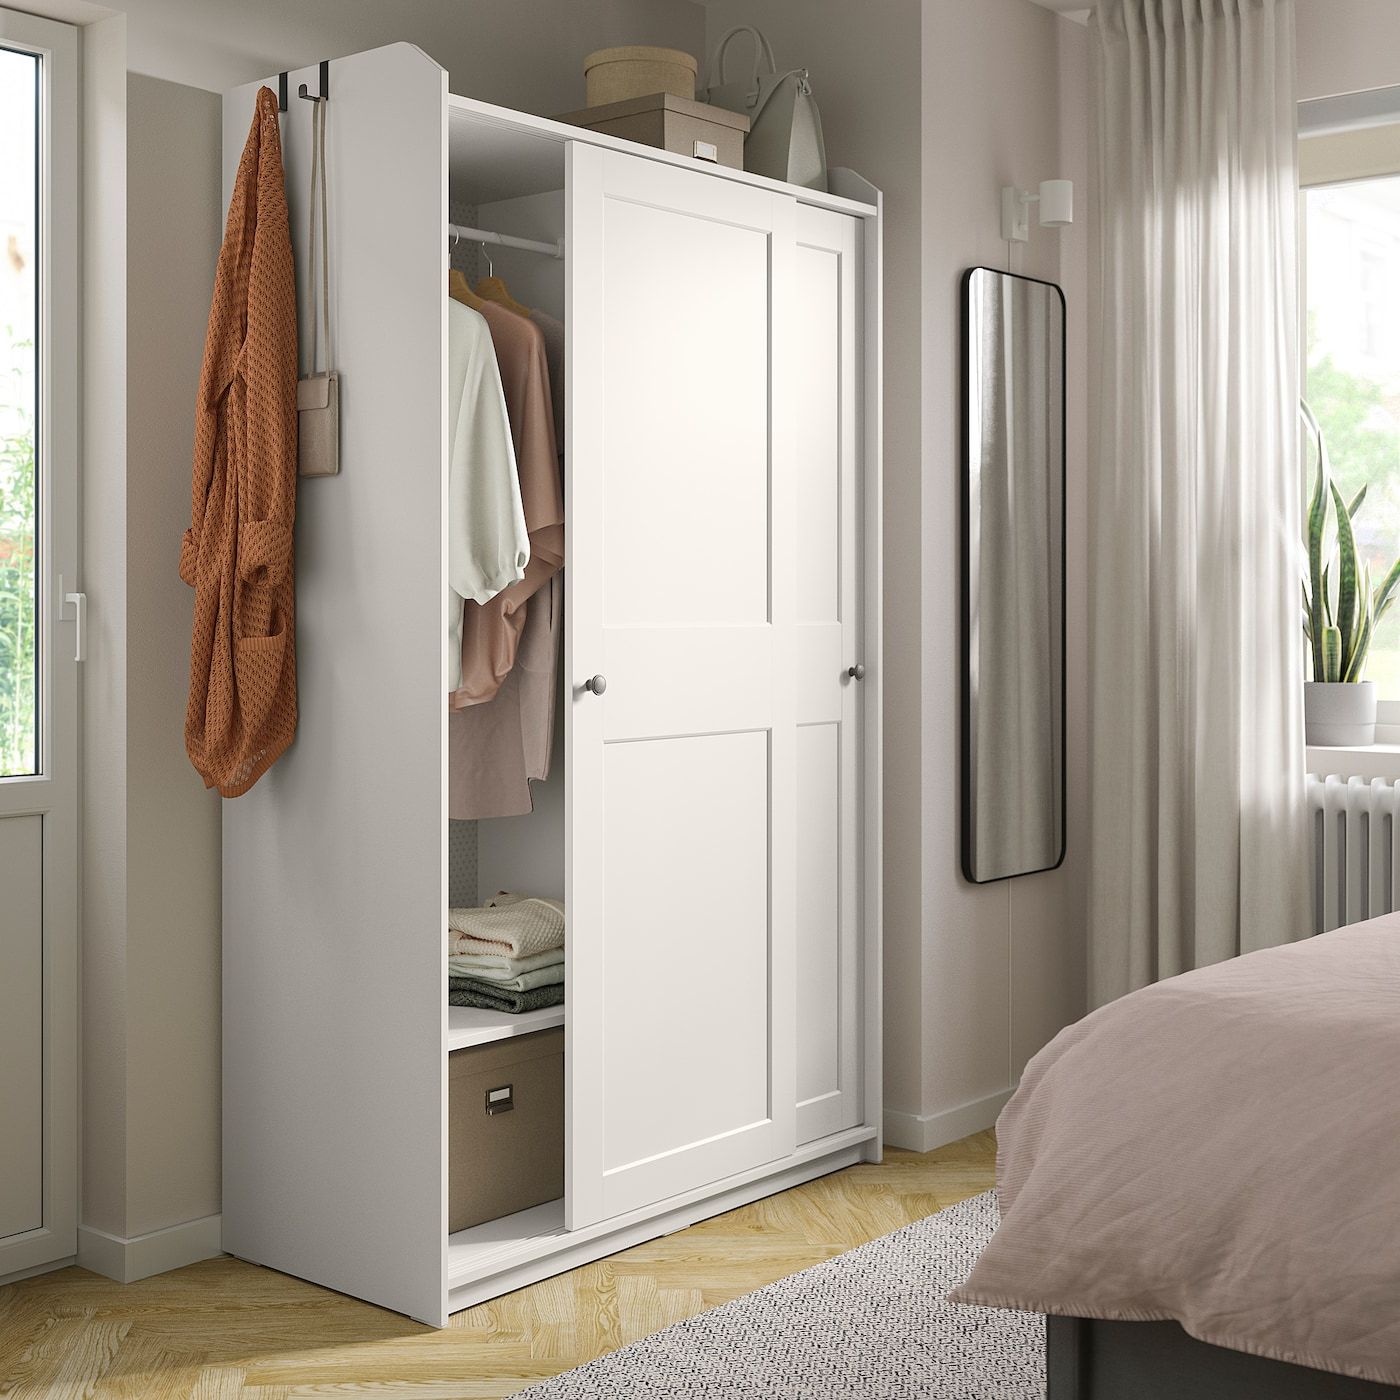 Hauga Wardrobe With Sliding Doors, White, 118x55x199 Cm – Ikea Pertaining To Sliding Door Wardrobes (View 13 of 20)